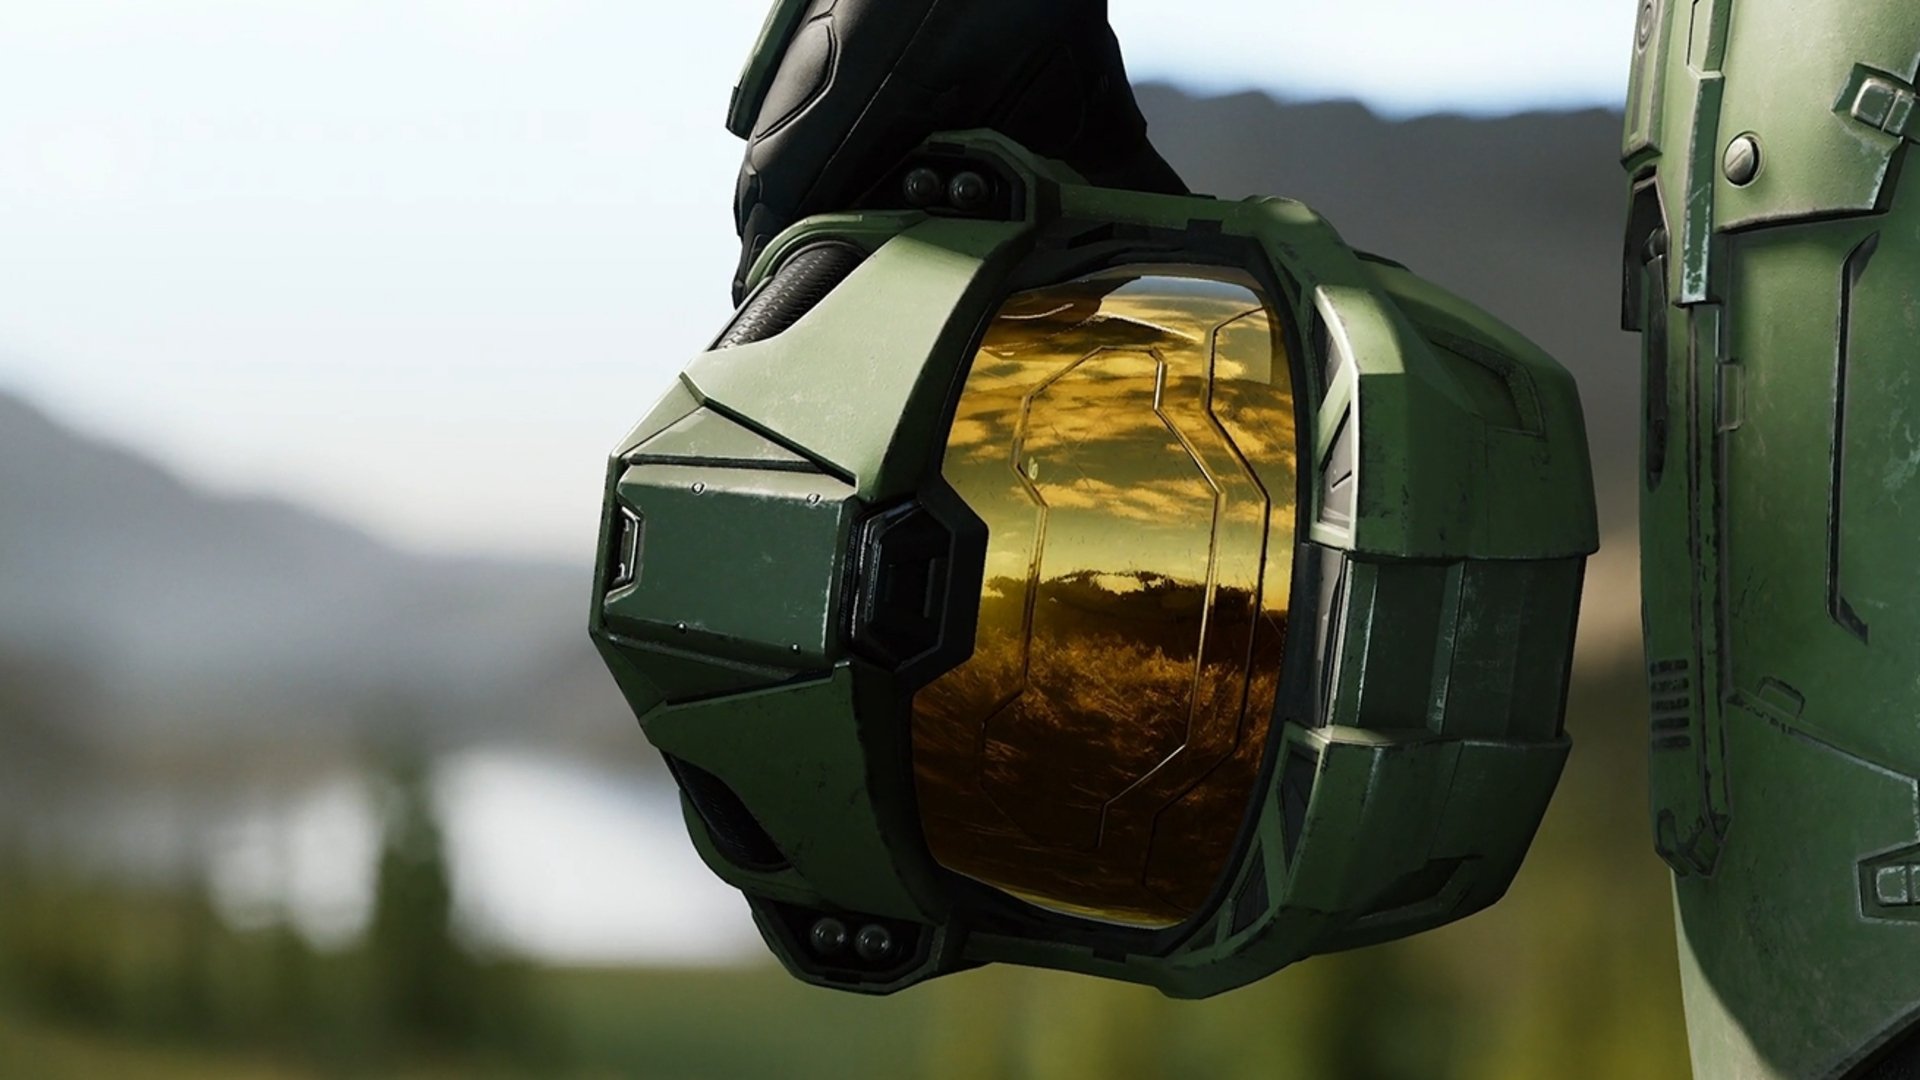 Halo Infinite Season 4 will add a new progression system called Career Rank